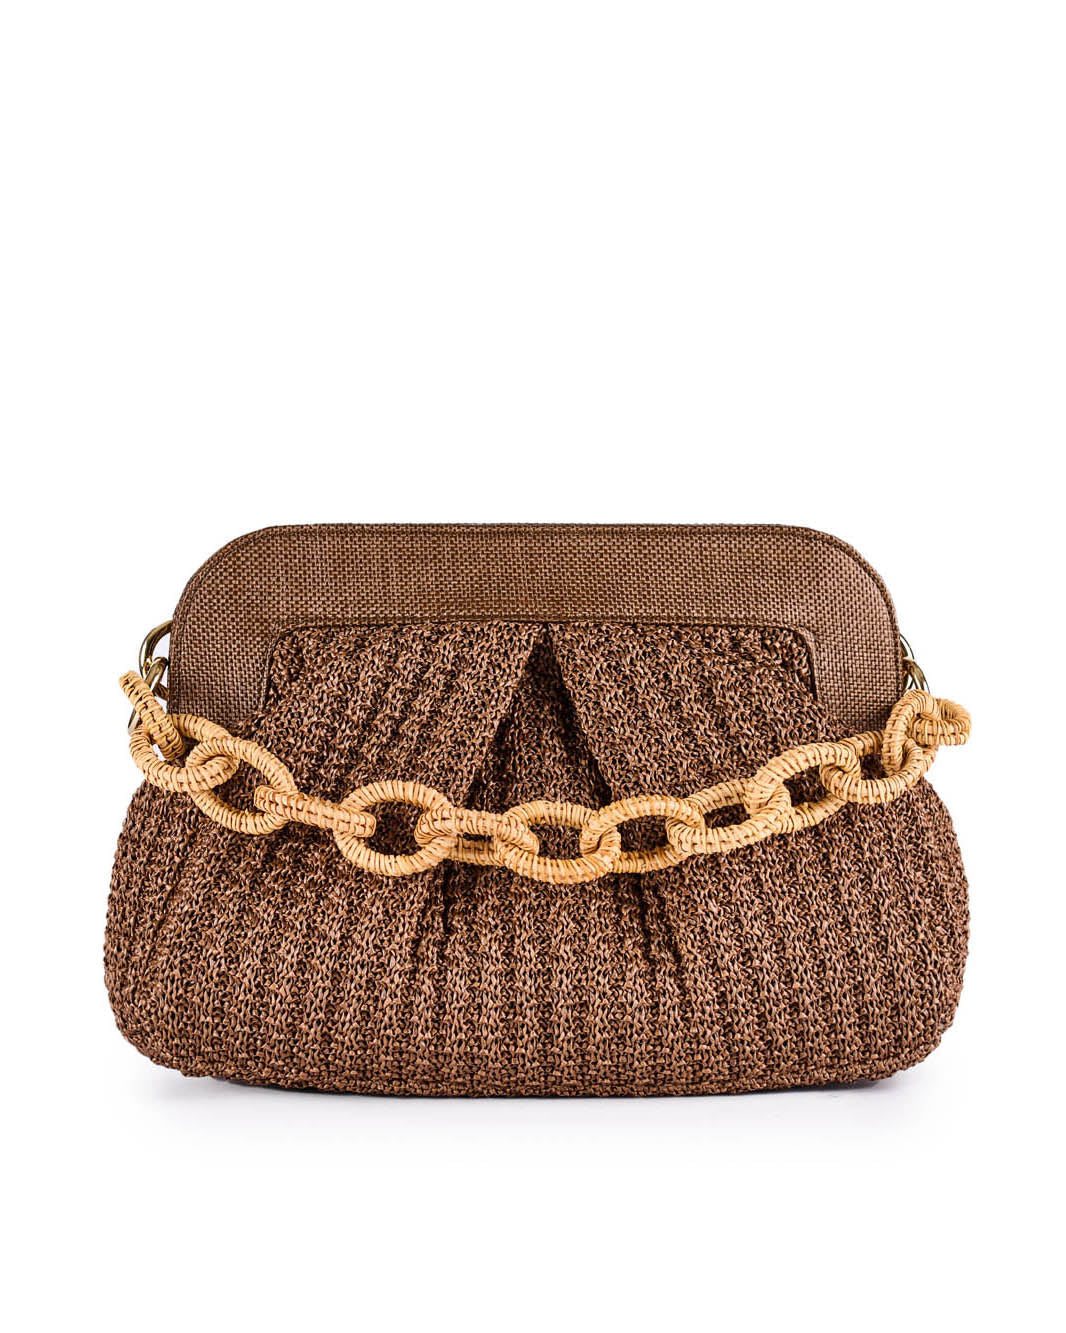 Brown woven handbag with chain strap